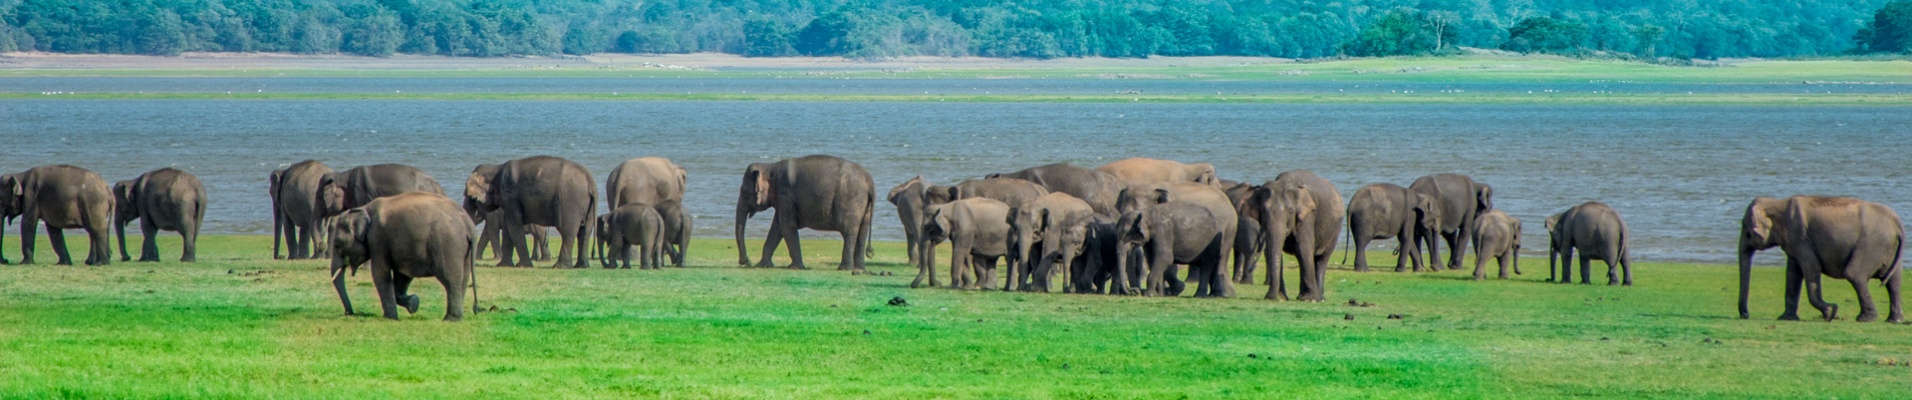 famille elephants parc minneriya